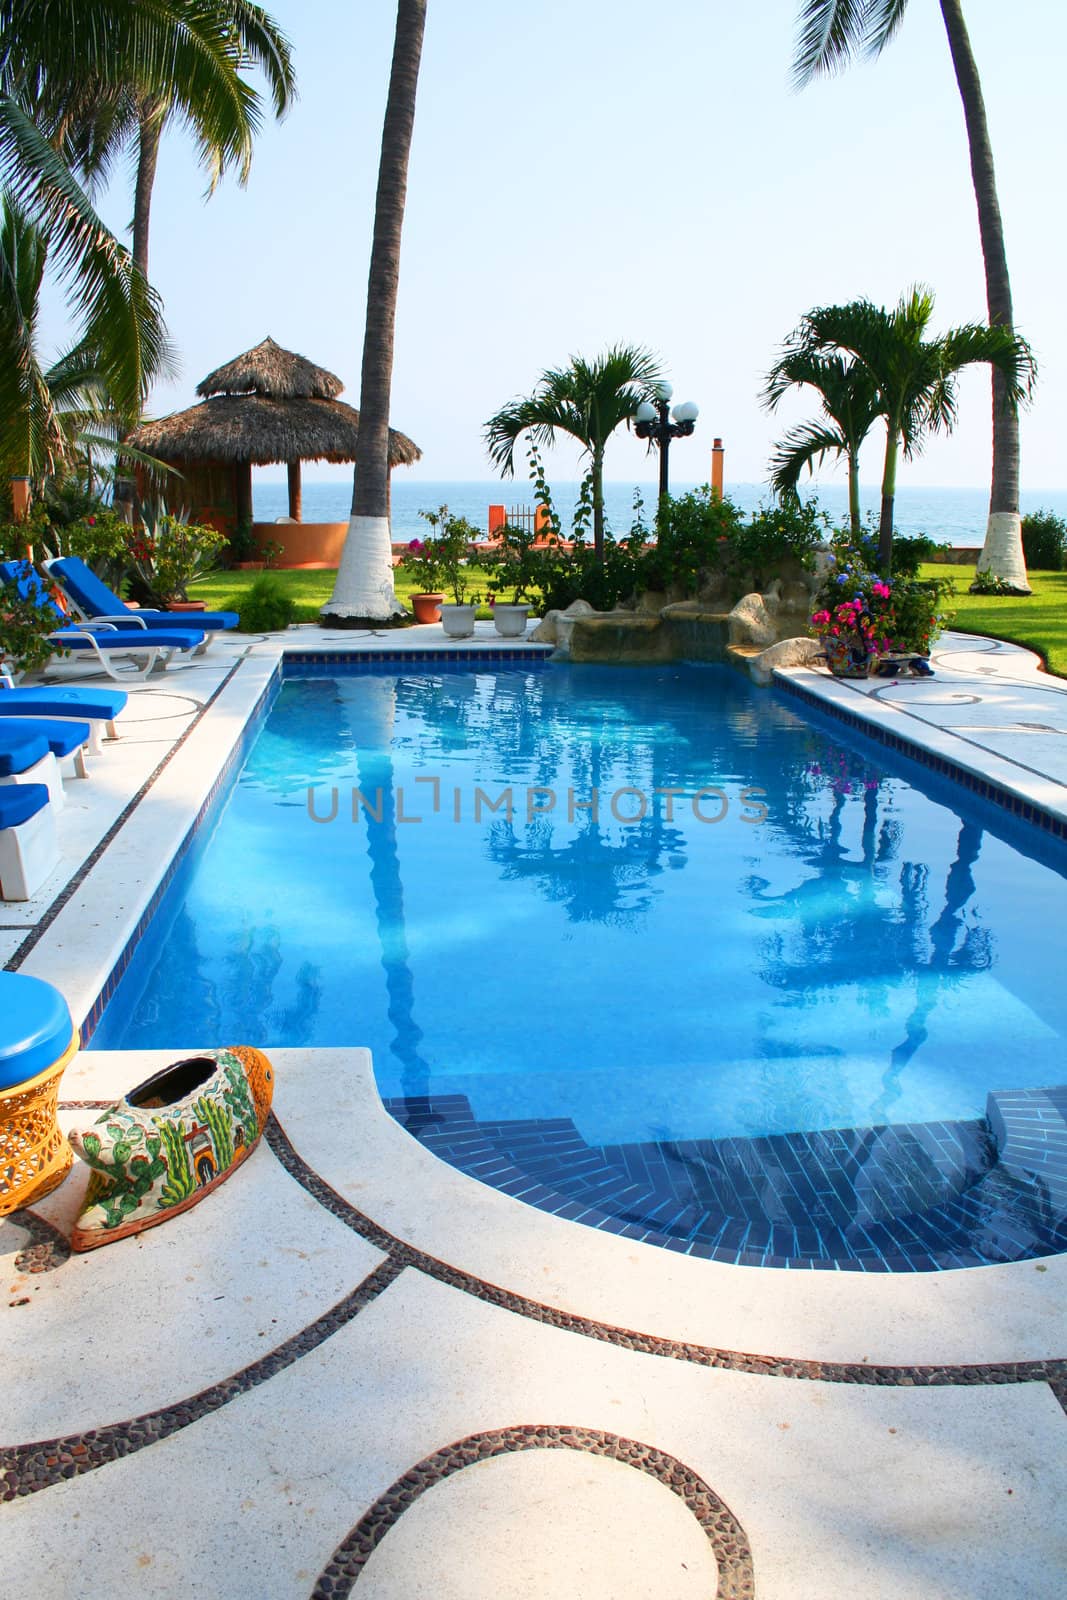 Luxury tropical pool overlooking cabana and ocean